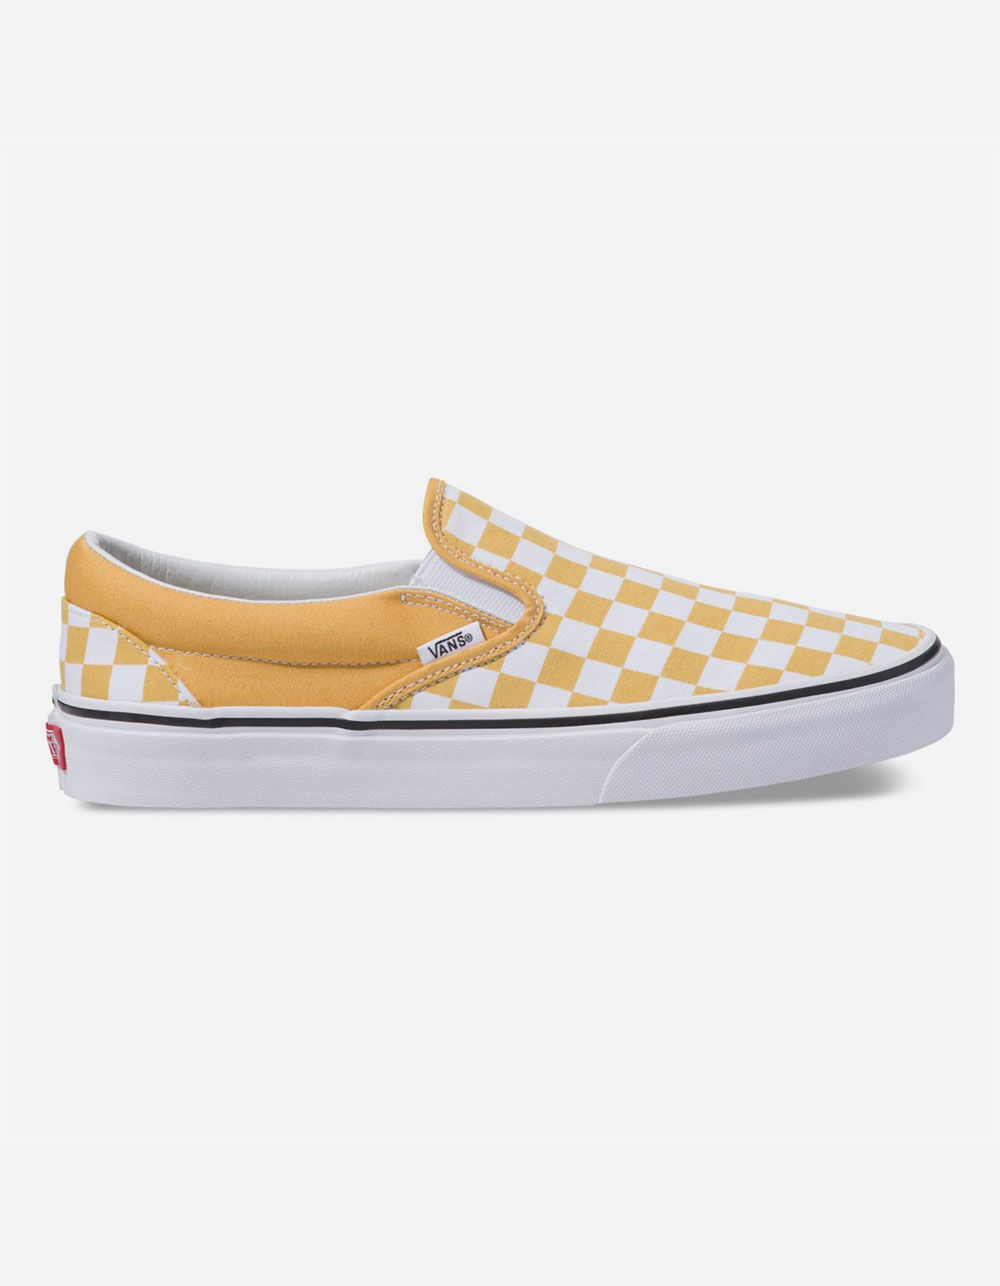 Vans, Shoes, Vans Ltd Ed Yellow Classic Checkered Slipon Flax True White